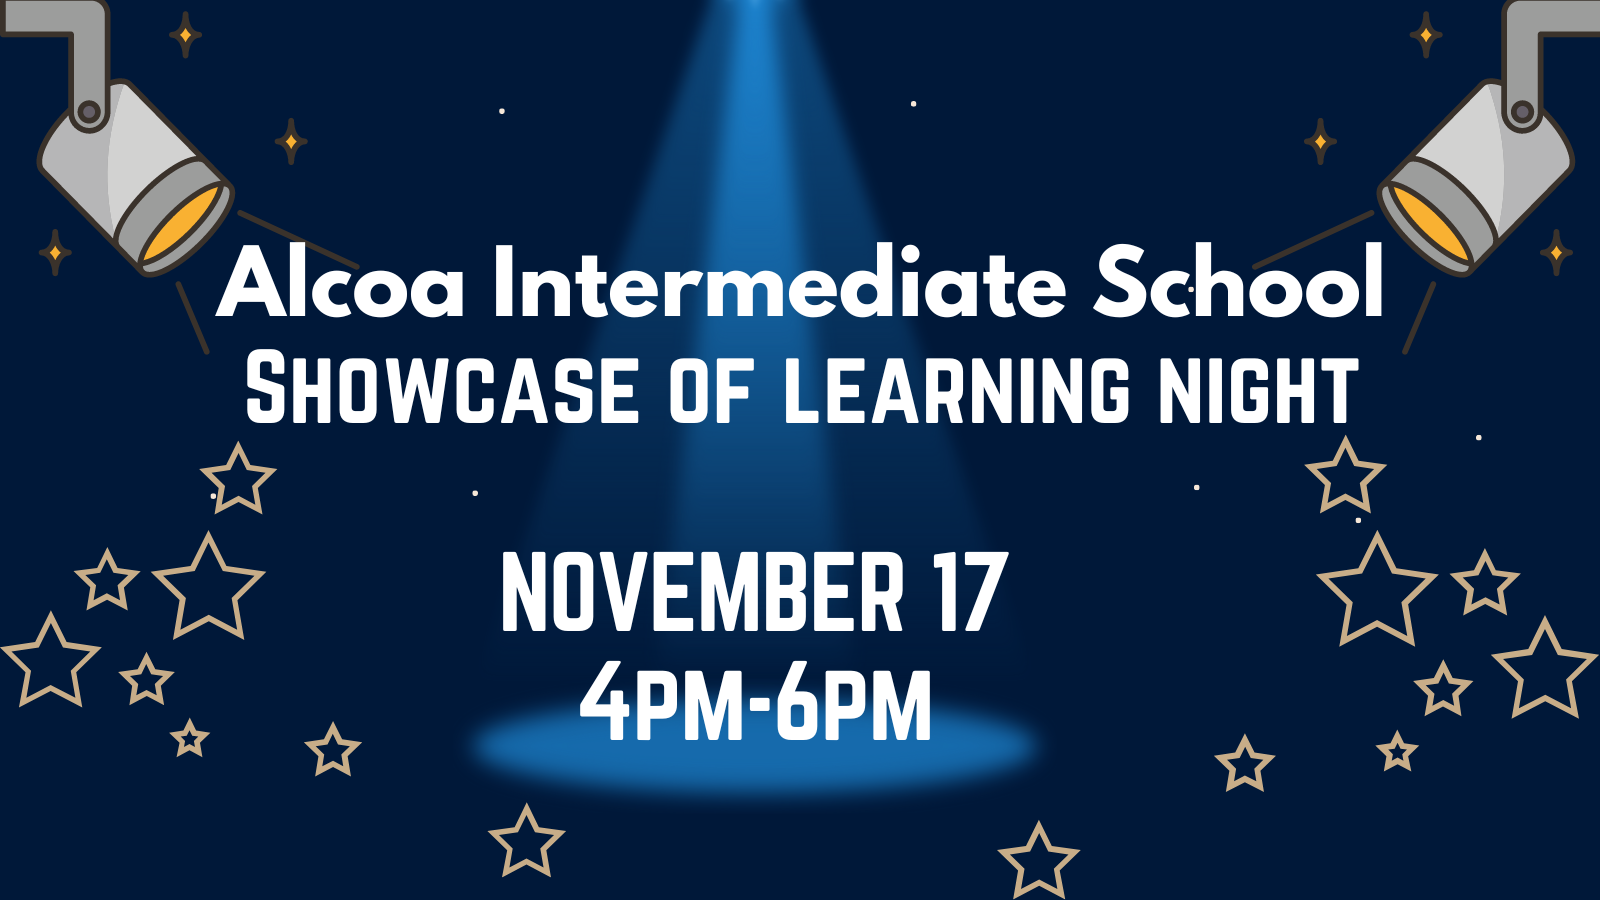 ais showcase of learning night november 17, 4-6